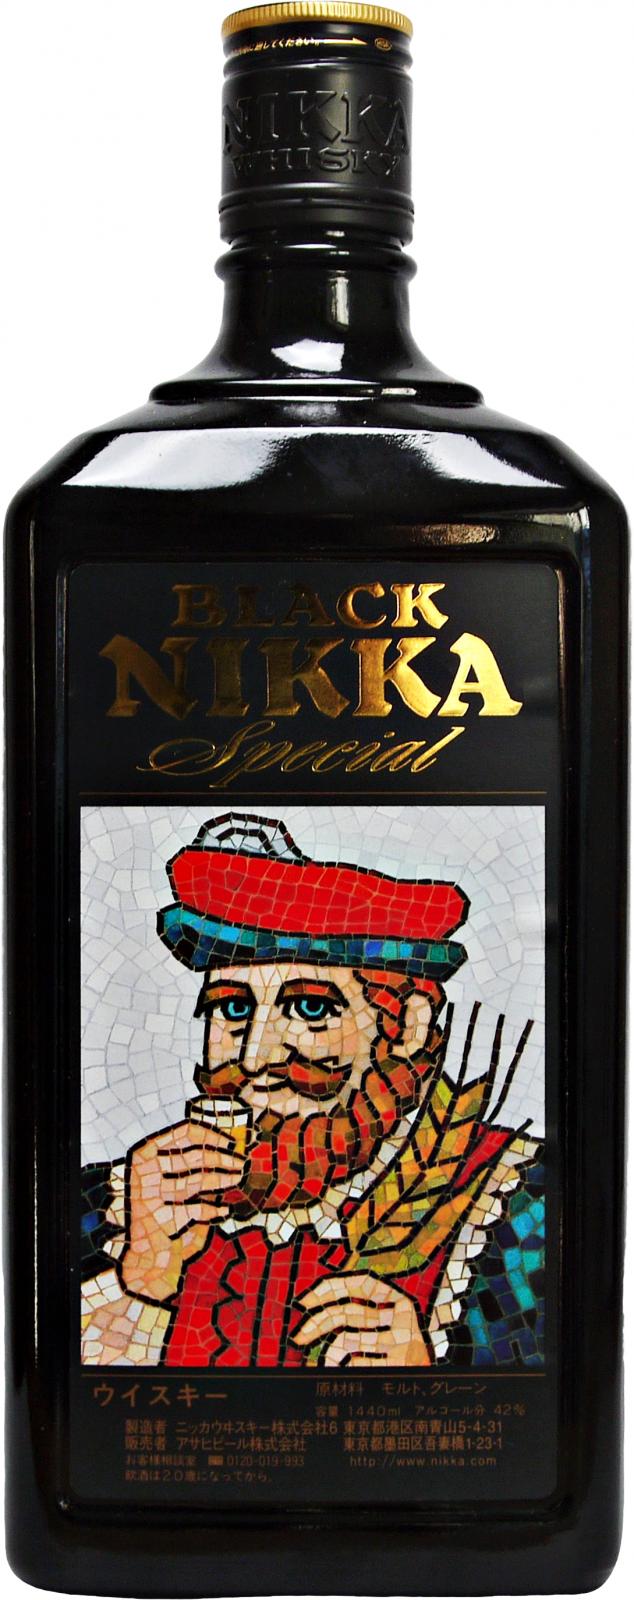 Nikka Black Special Whisky